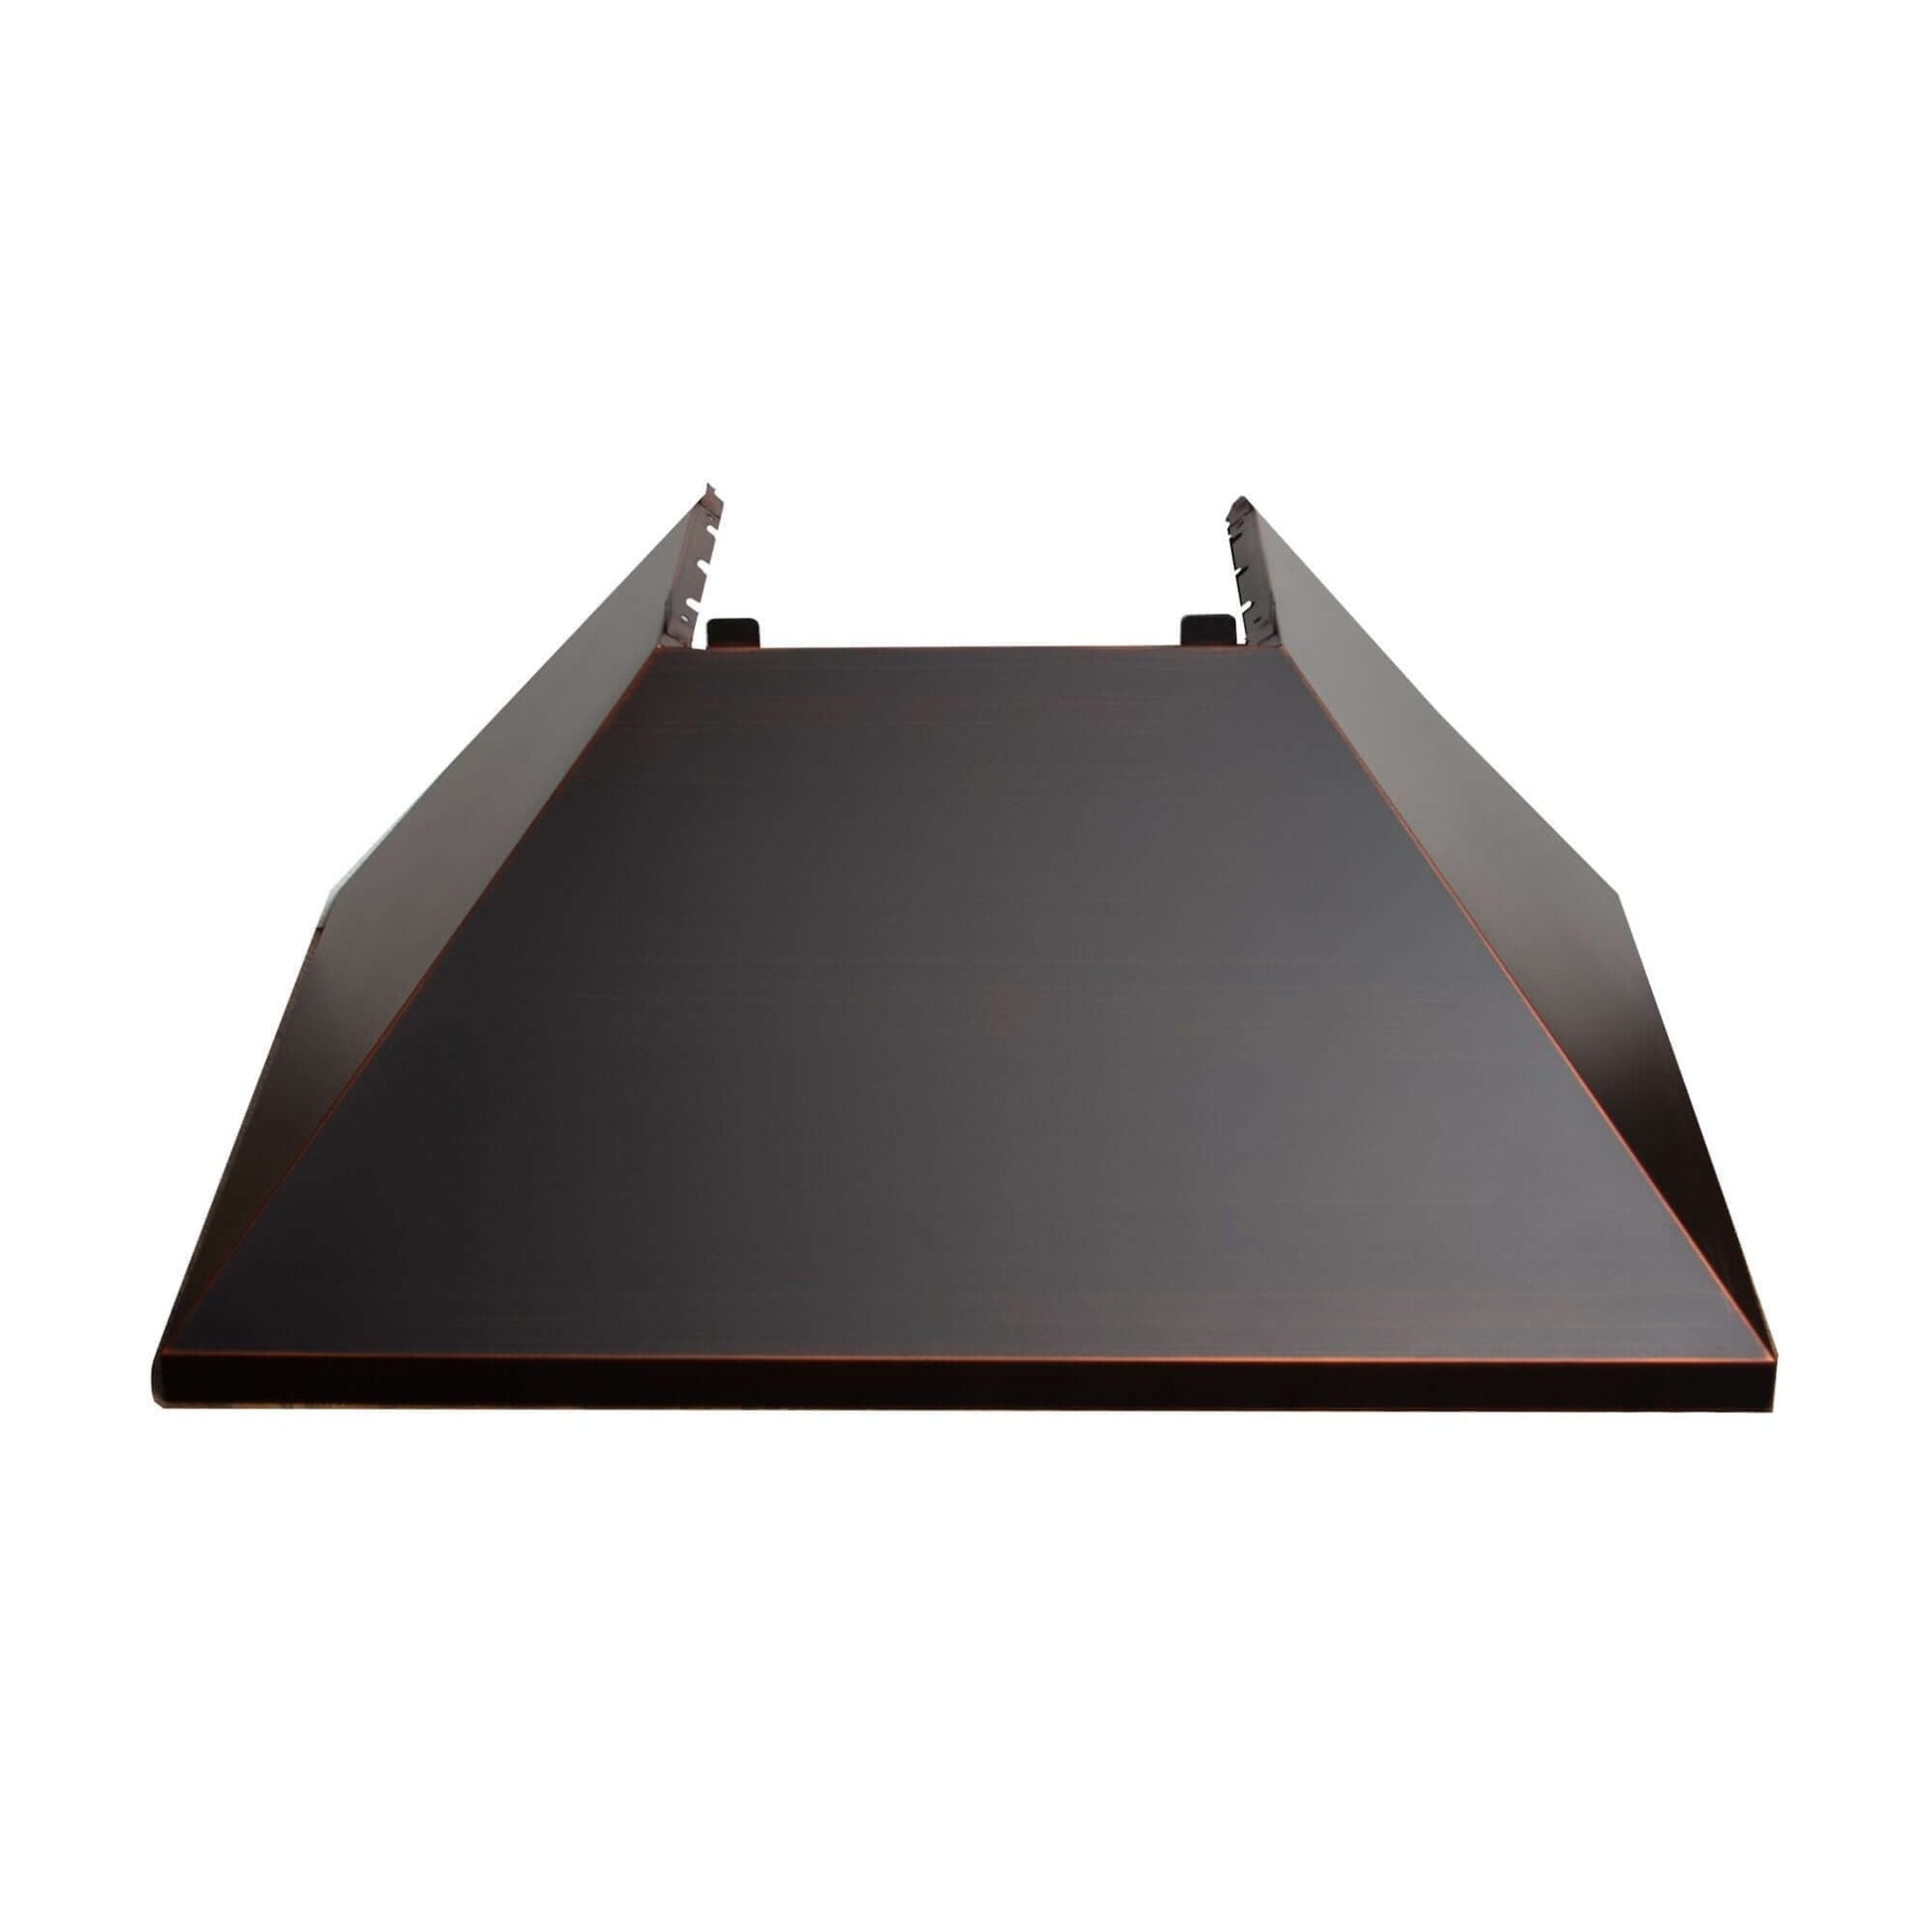 ZLINE Ducted DuraSnow® Stainless Steel Range Hood - Oil Rubbed Bronze Shell